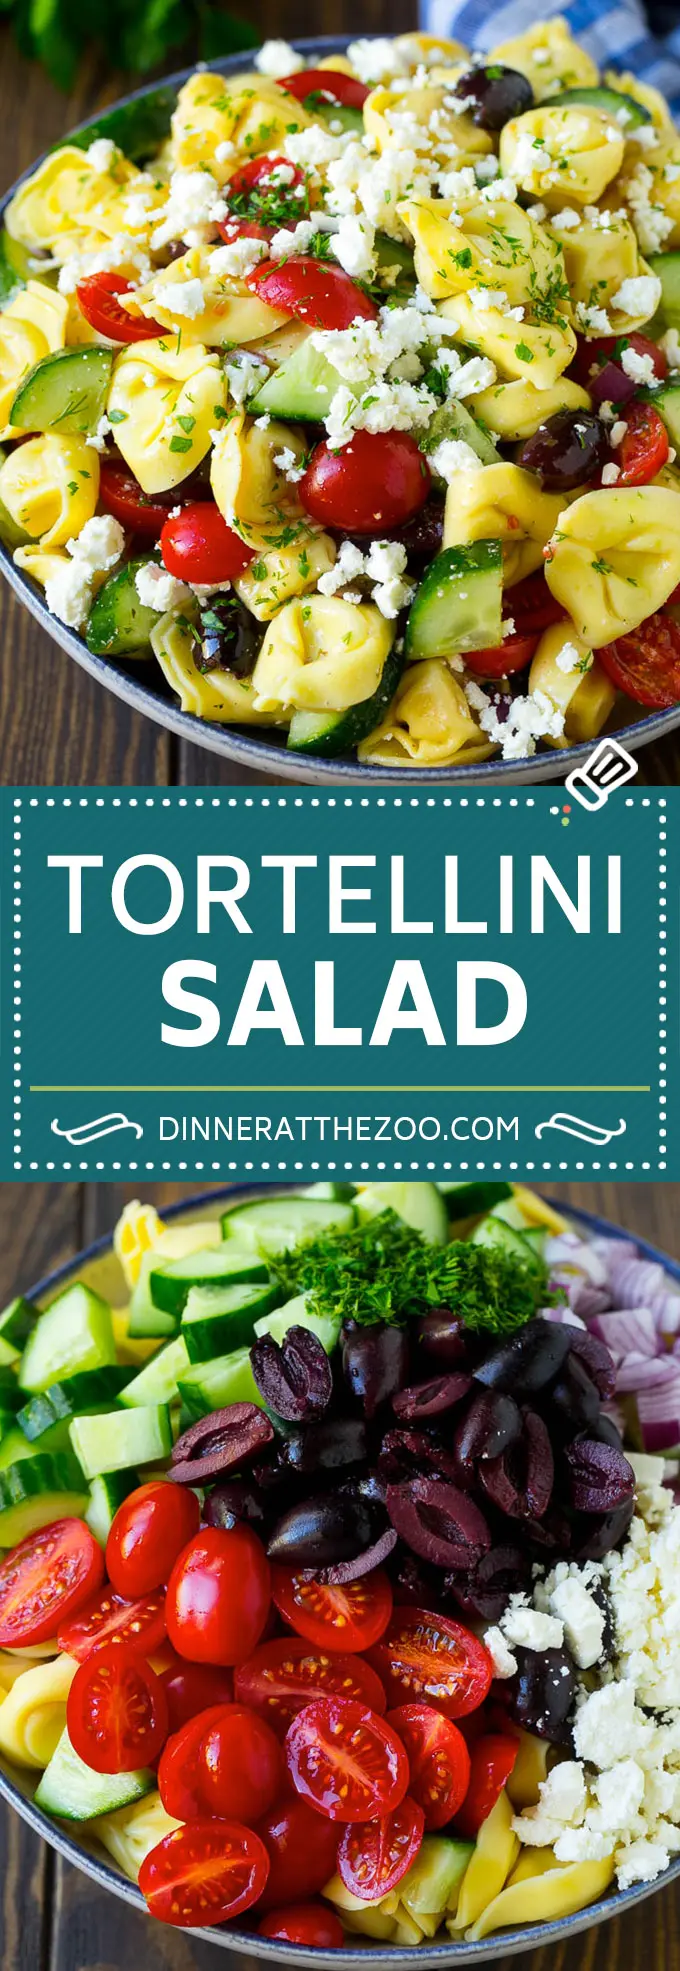 Receta de ensalada griega de tortellini | Ensalada de pasta | Ensalada de tortellini | Ensalada griega #greek #tortellini #pasta #salad #cucumbers #olives #dinner #dinneratthezoo